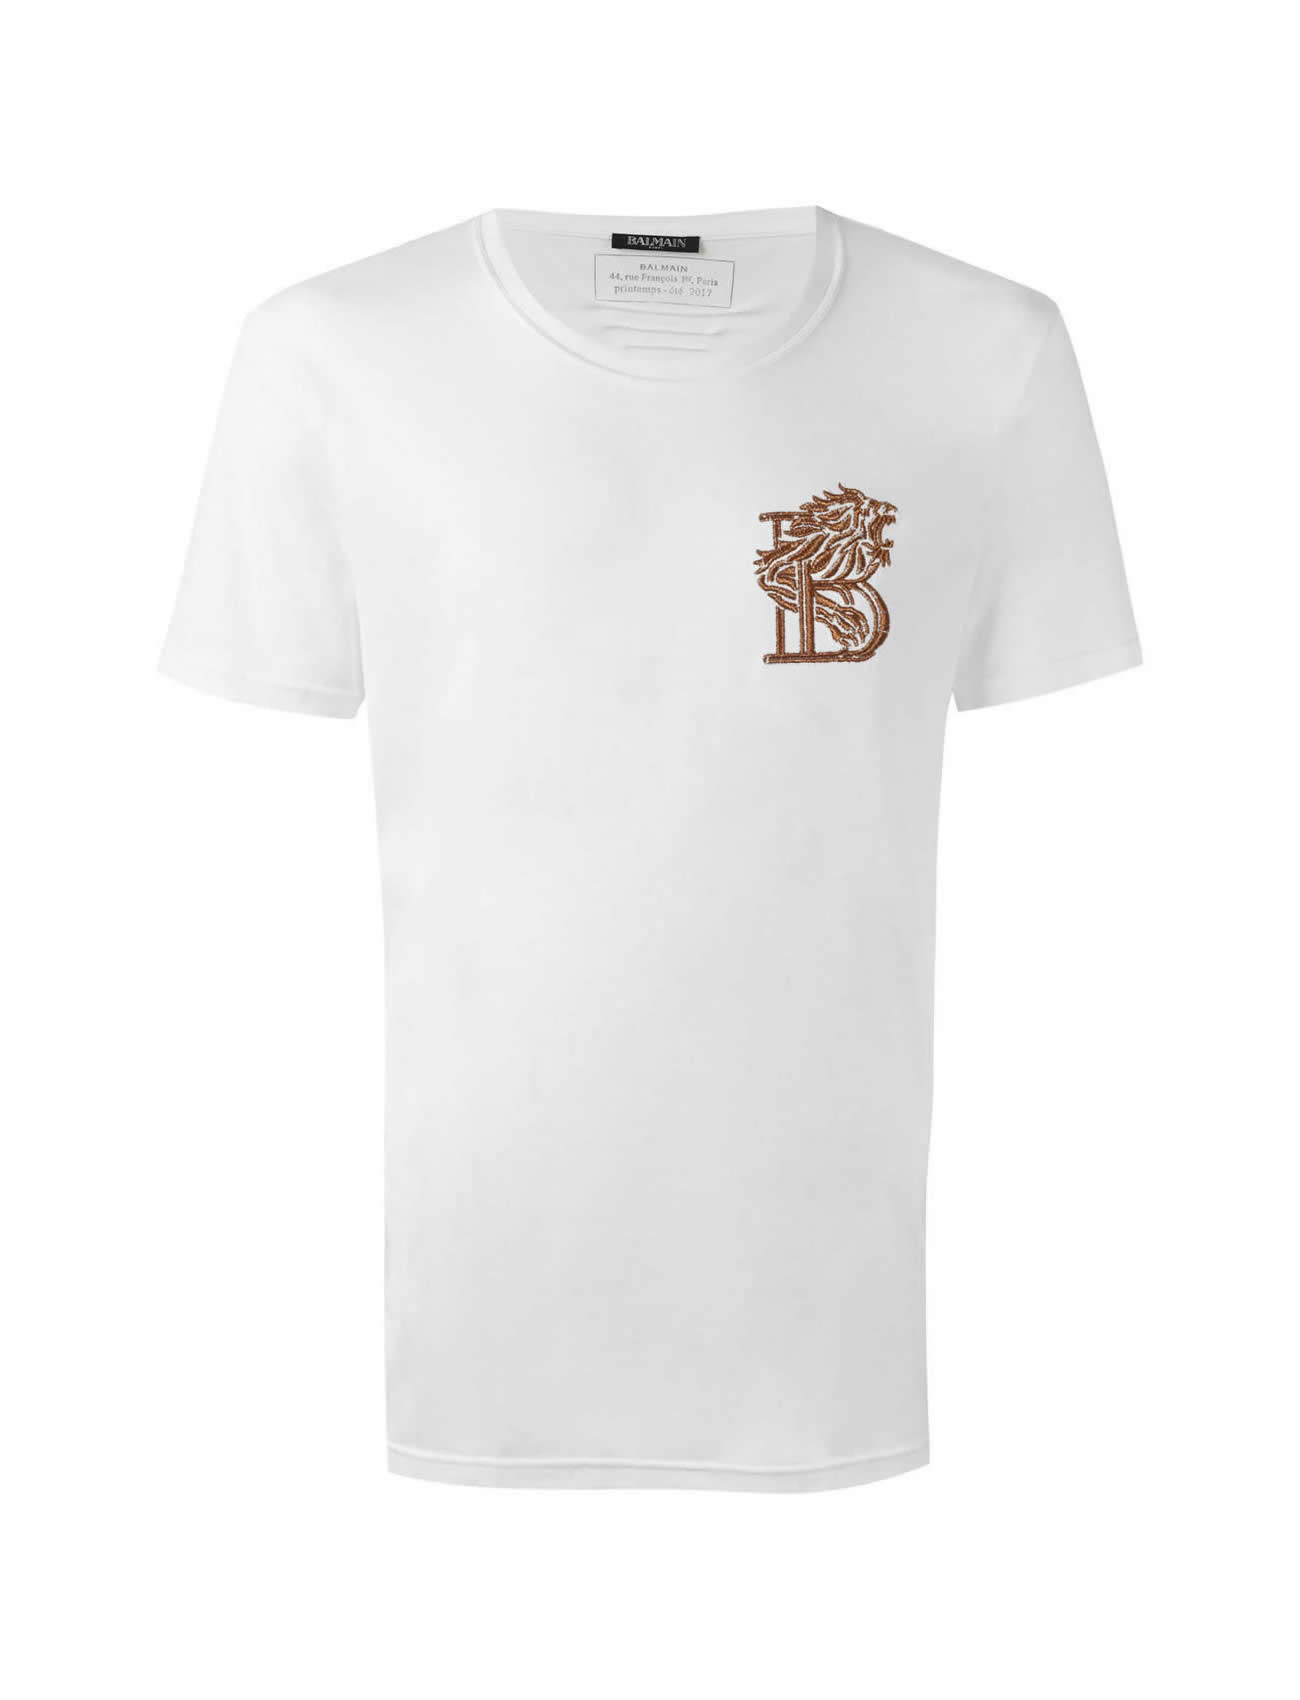 Balmain Lion Crew T Shirt in White - INTOTO7 Menswear